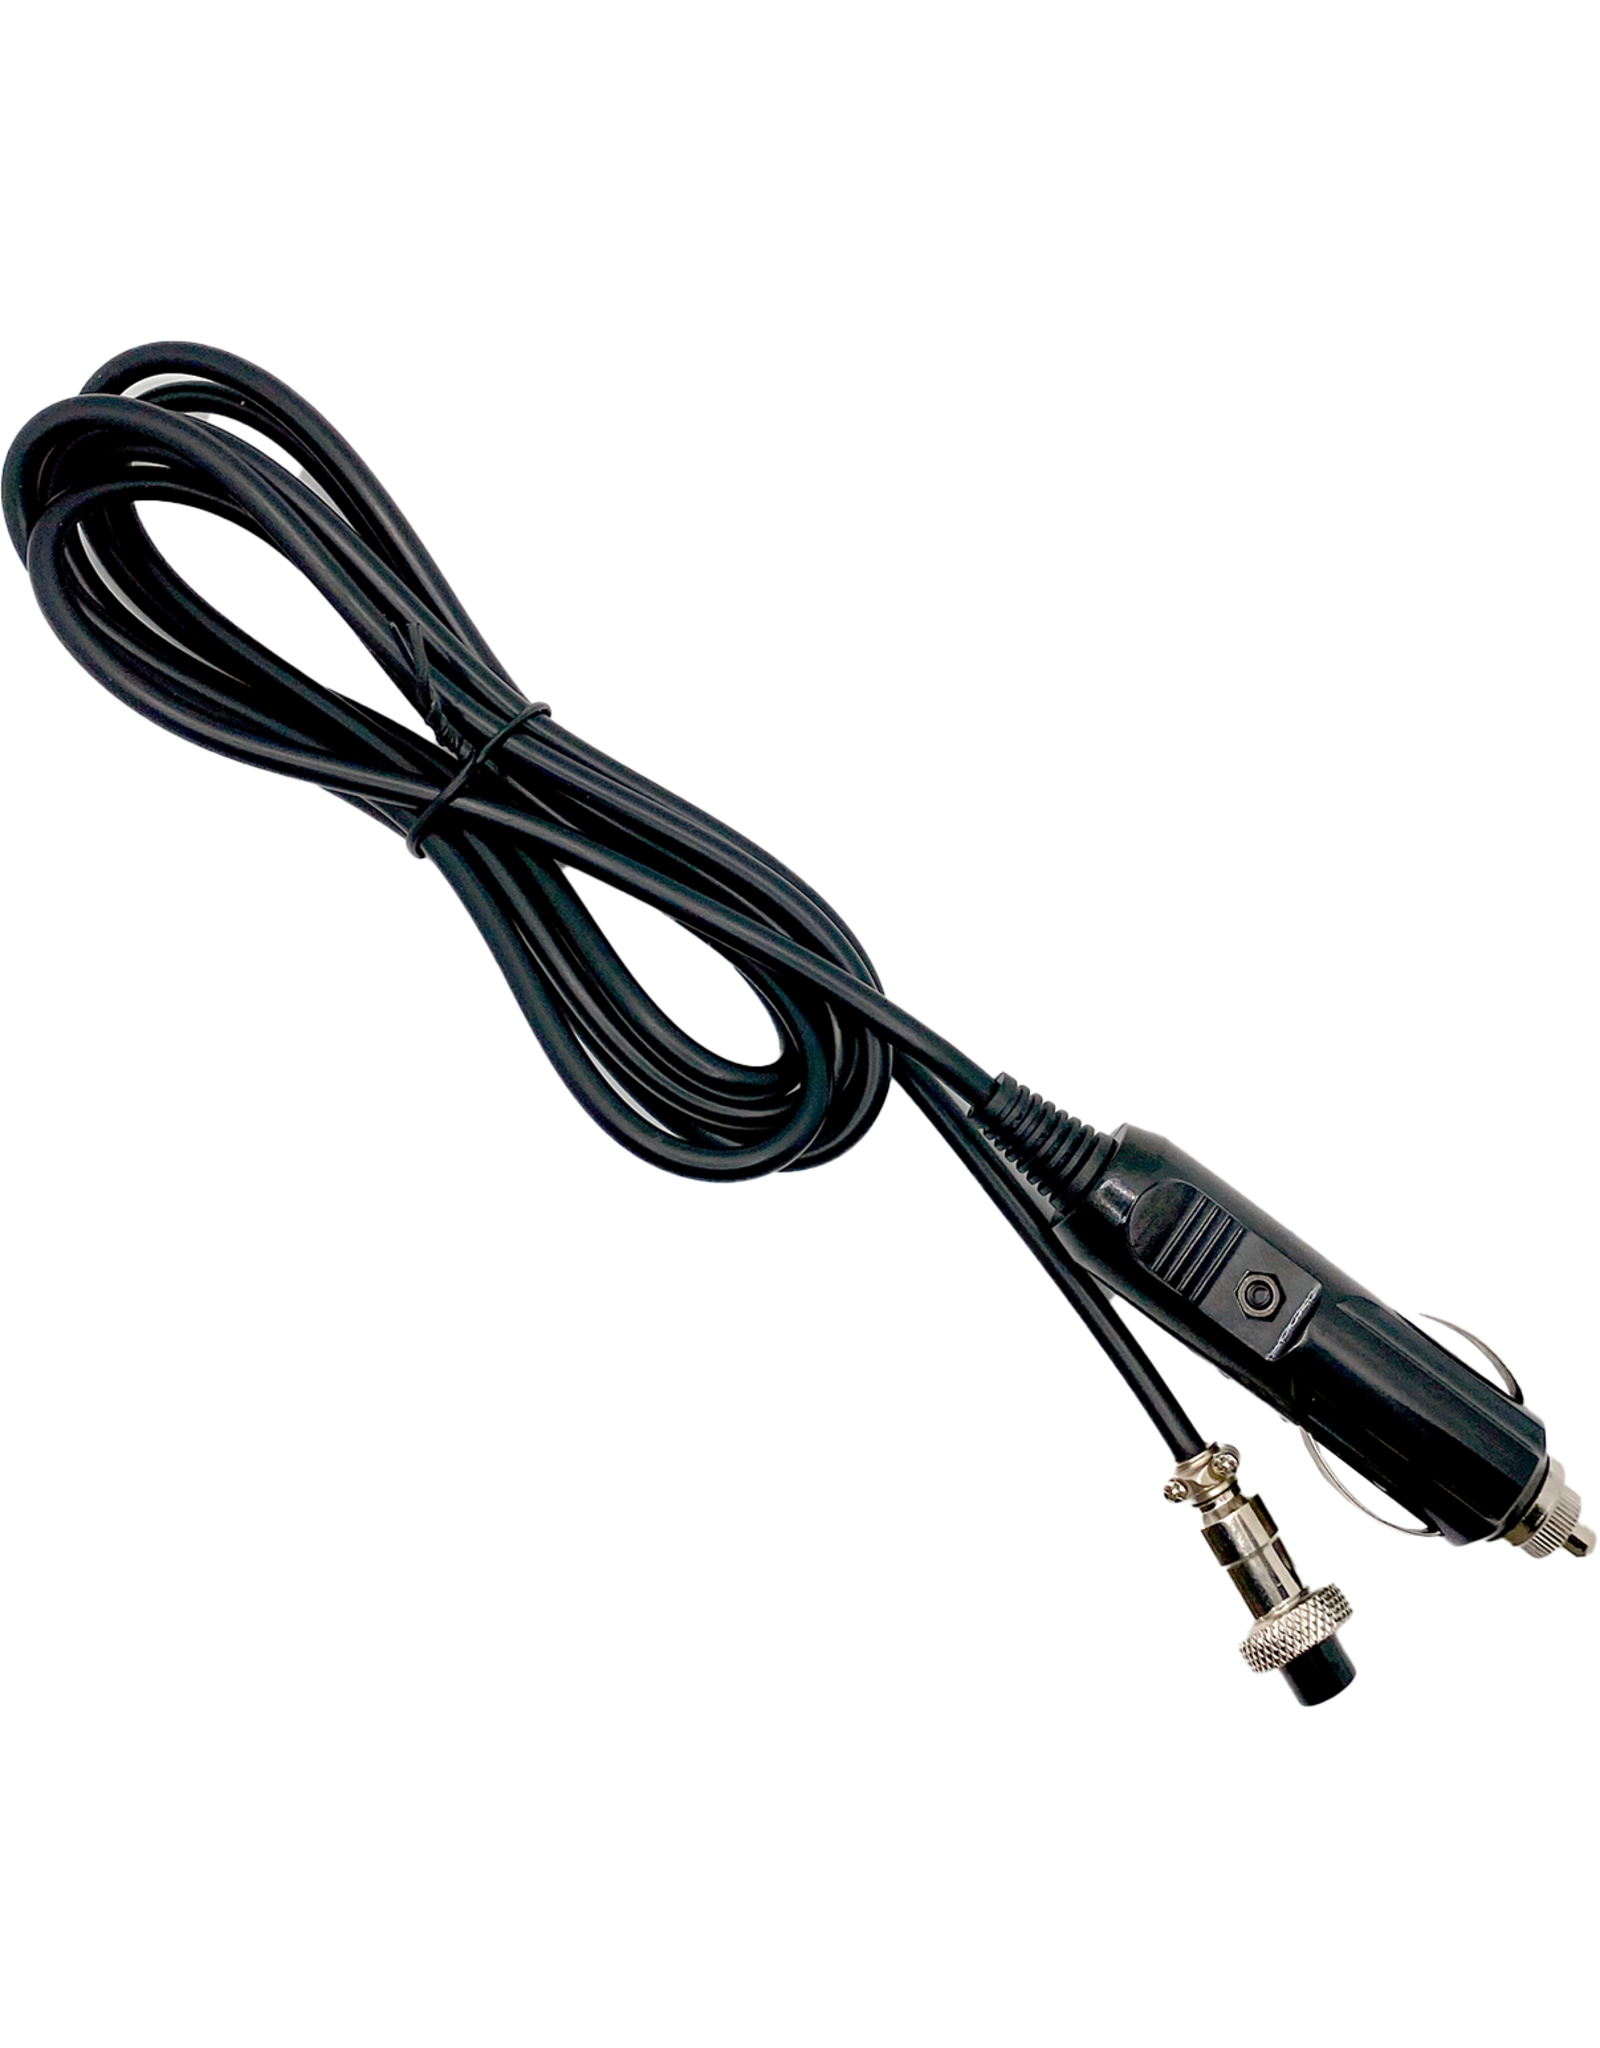 Pegasus Astro Pegasus Astro NXY-101 Cigarette Lighter to GX12 Adapter Cable